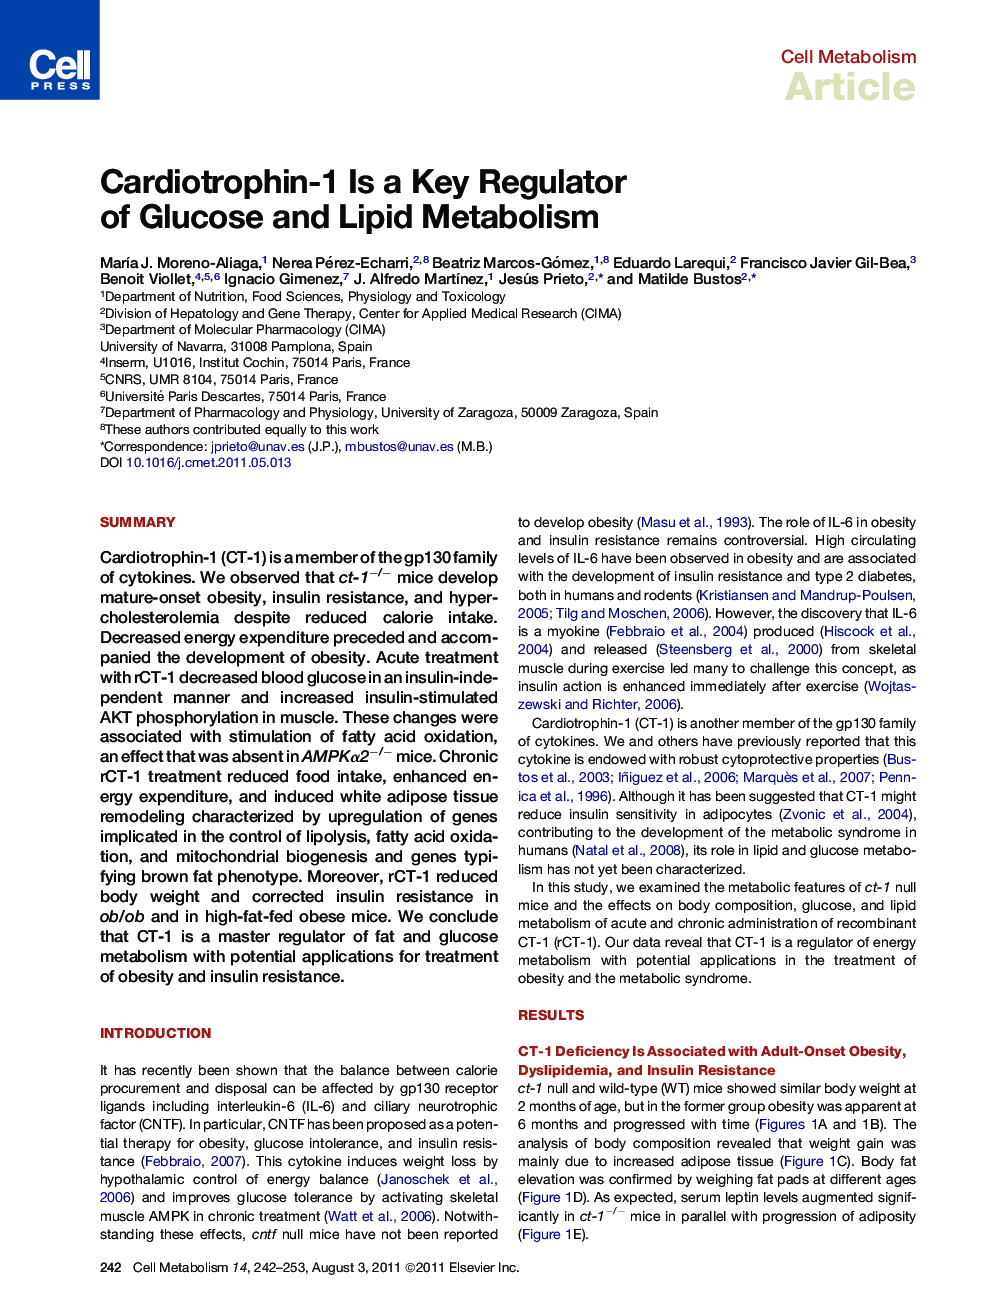 Cardiotrophin-1 Is a Key Regulator of Glucose and Lipid Metabolism